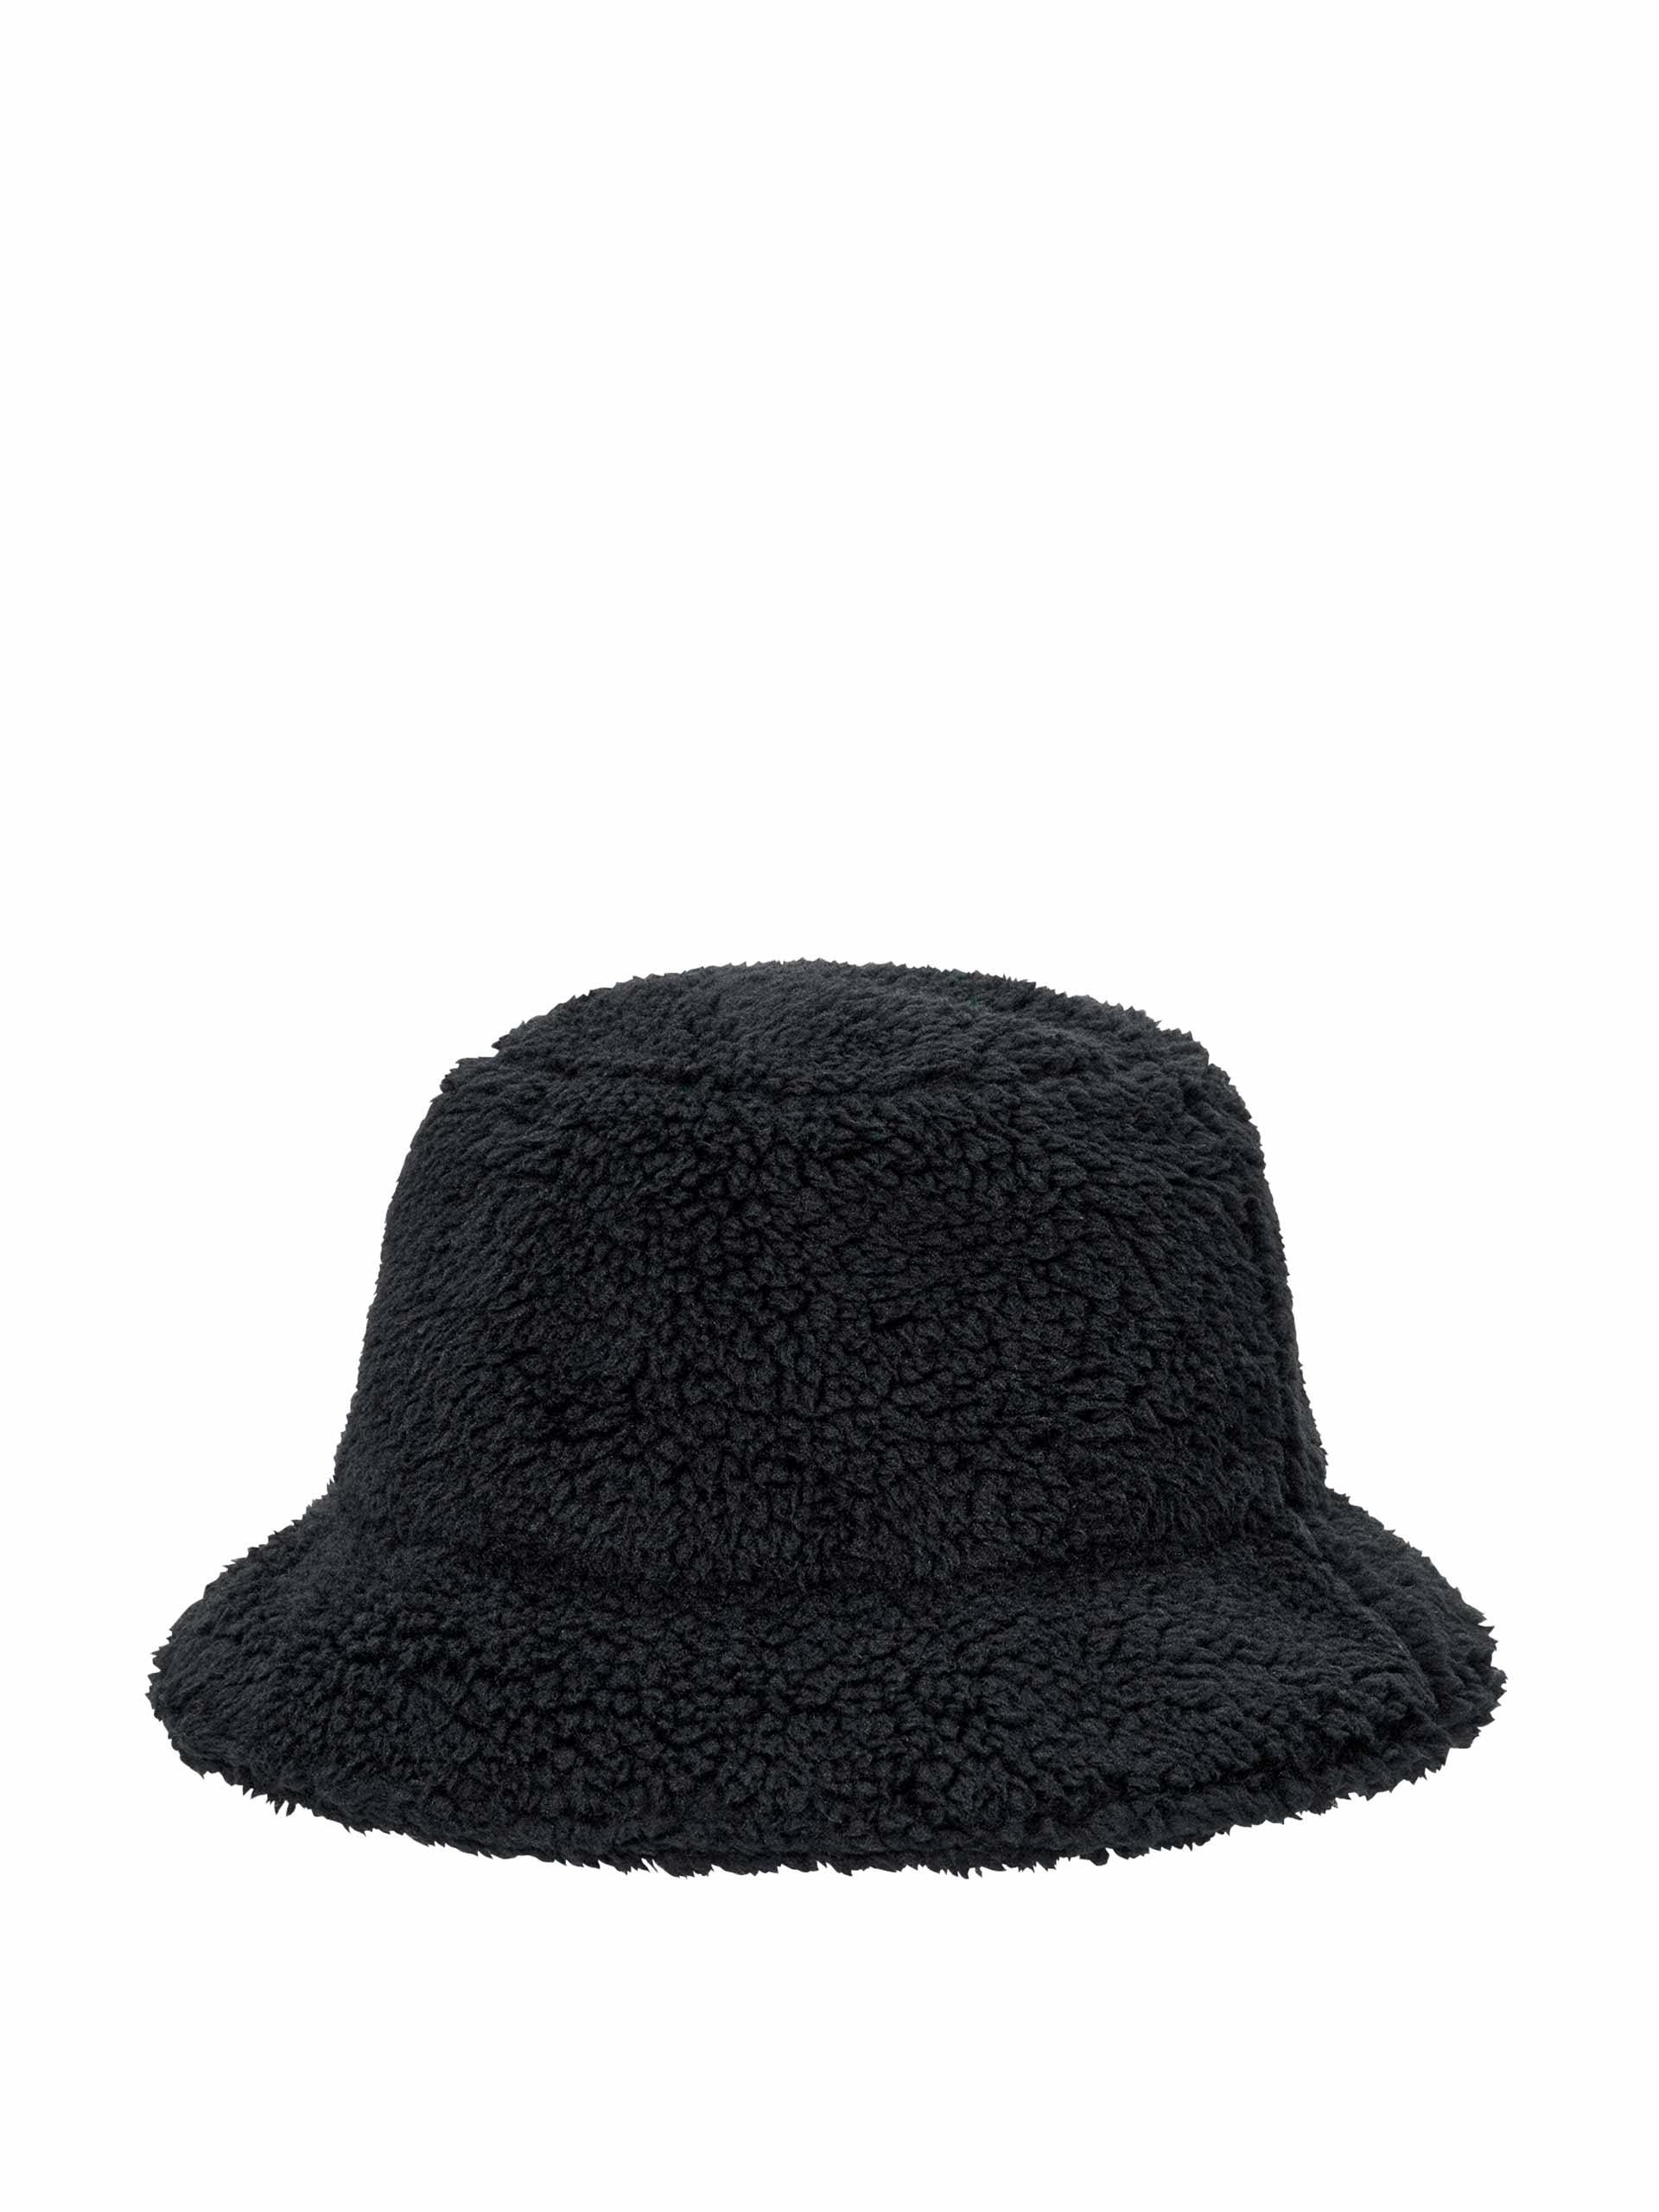 Black adjustable bucket hat